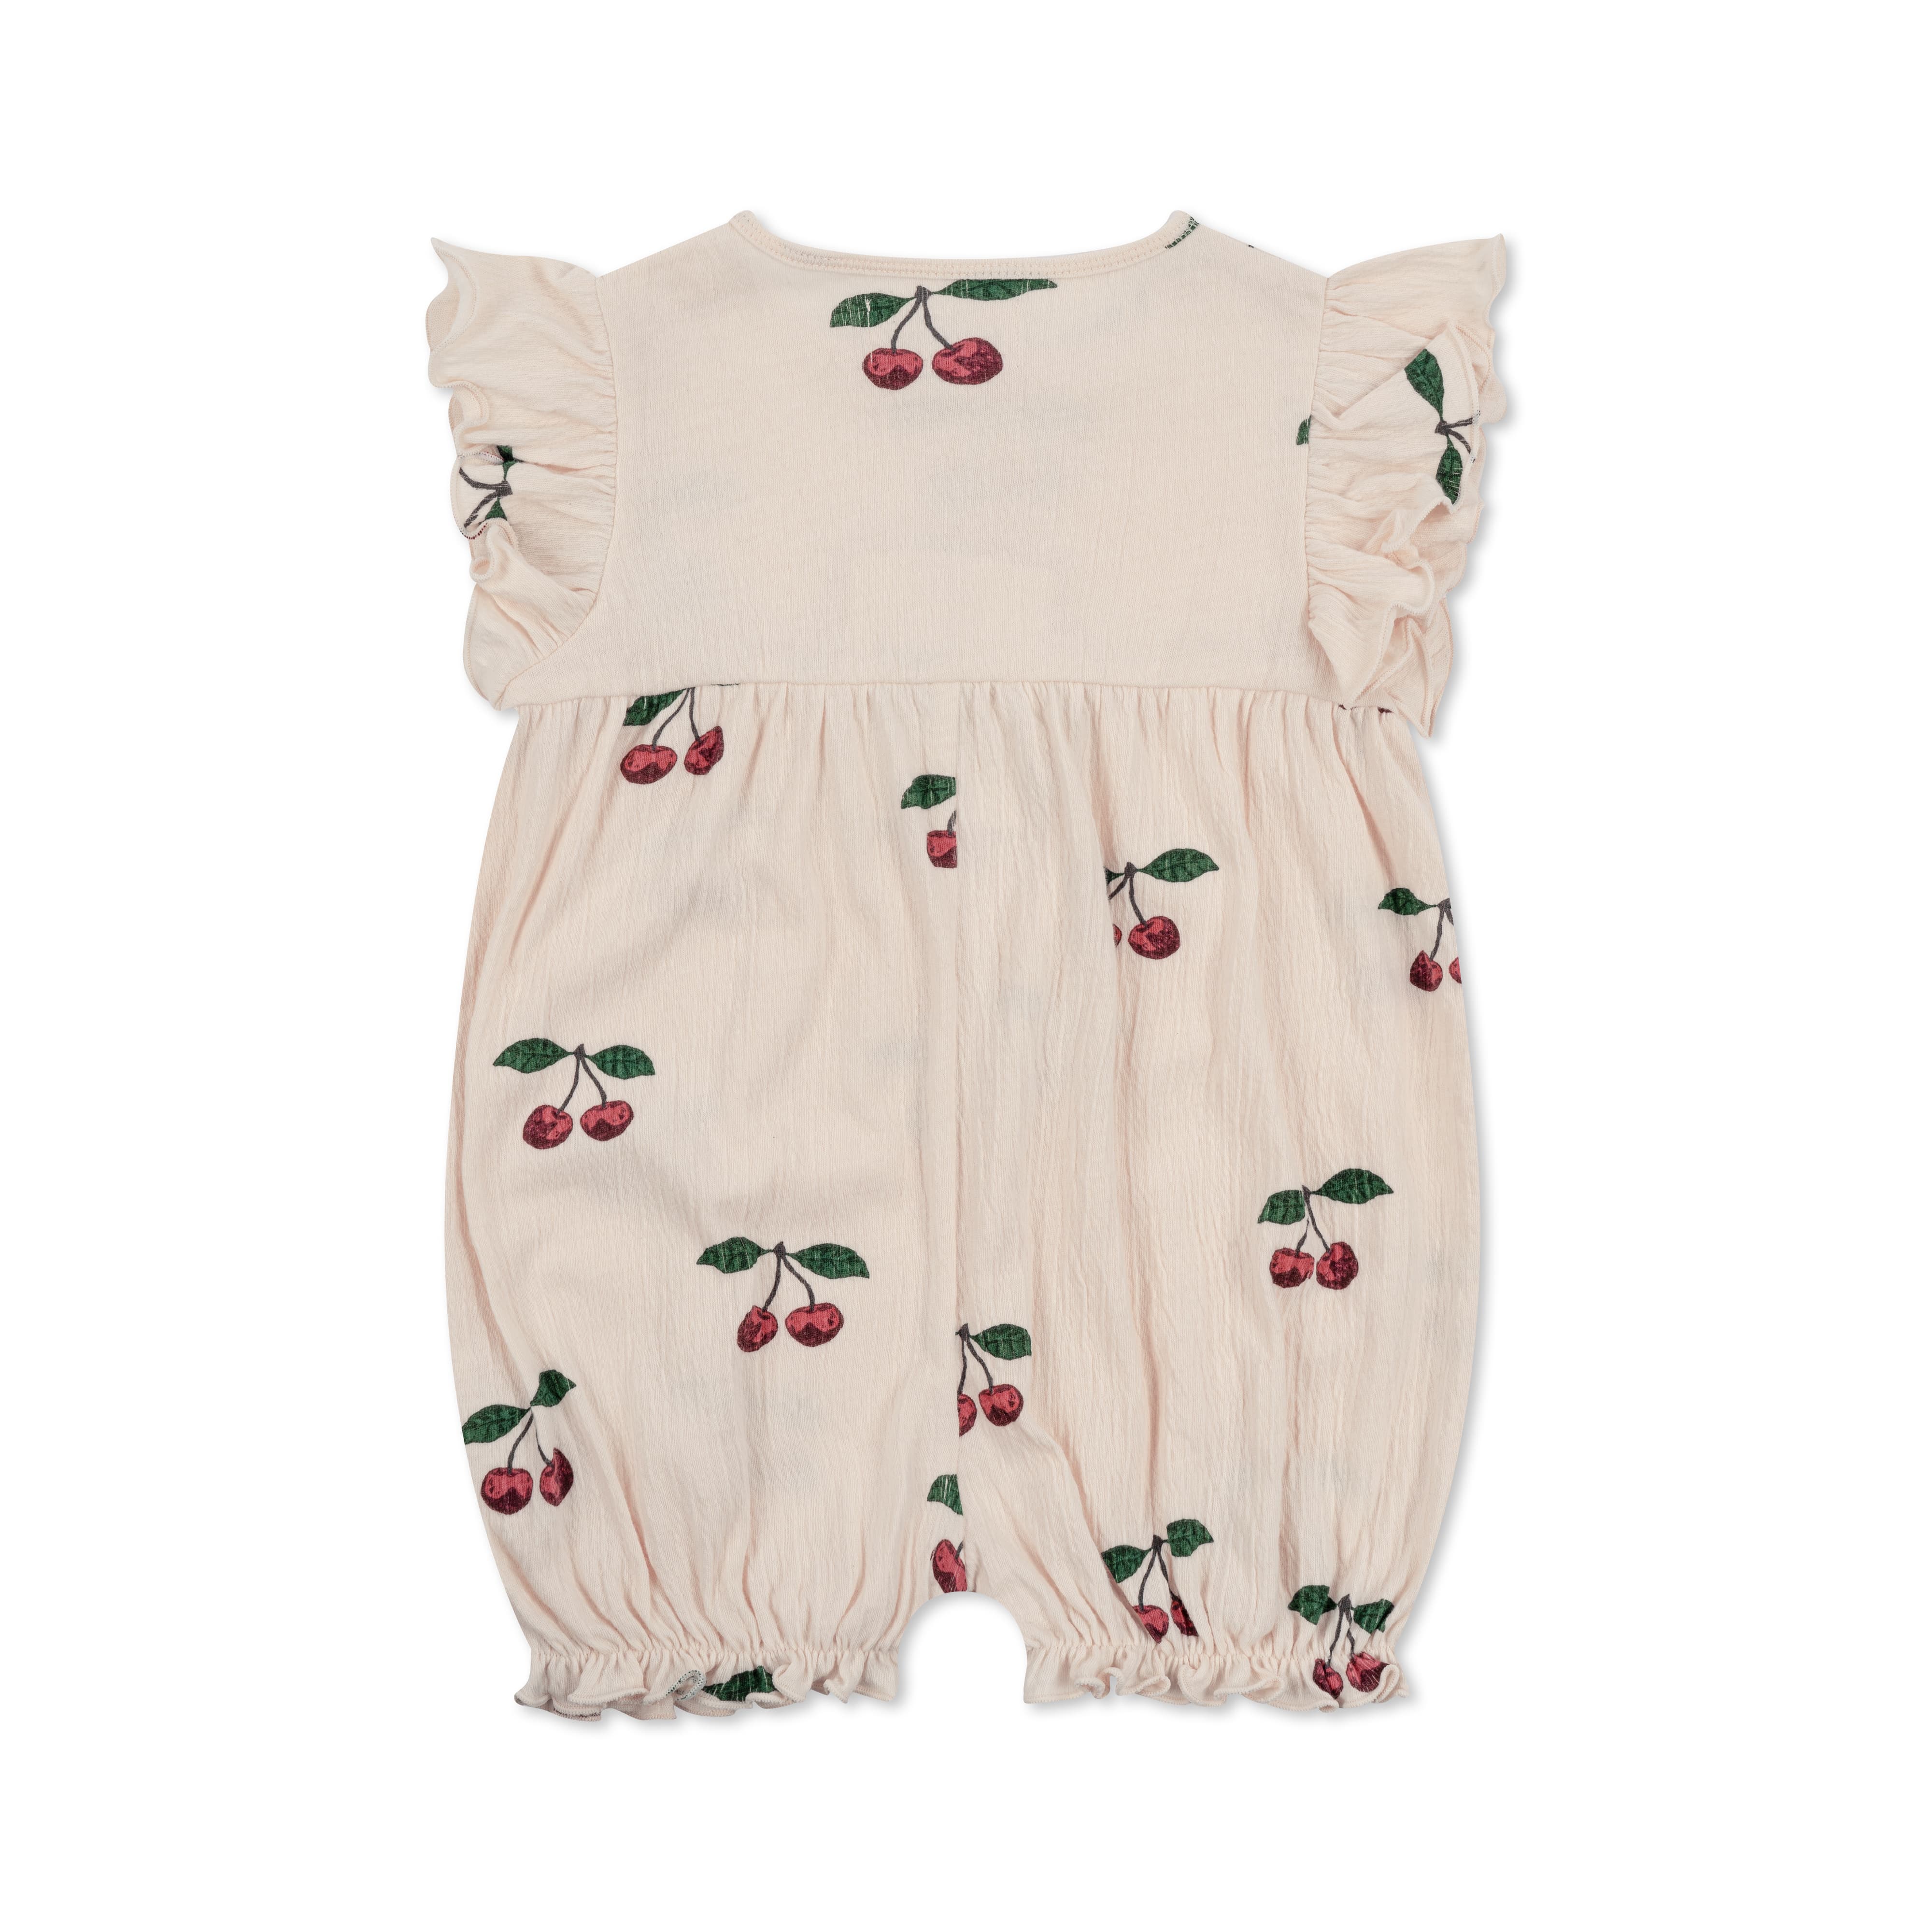 Ali Picks on Instagram: Floral Dresses & Baby Romper now in stock